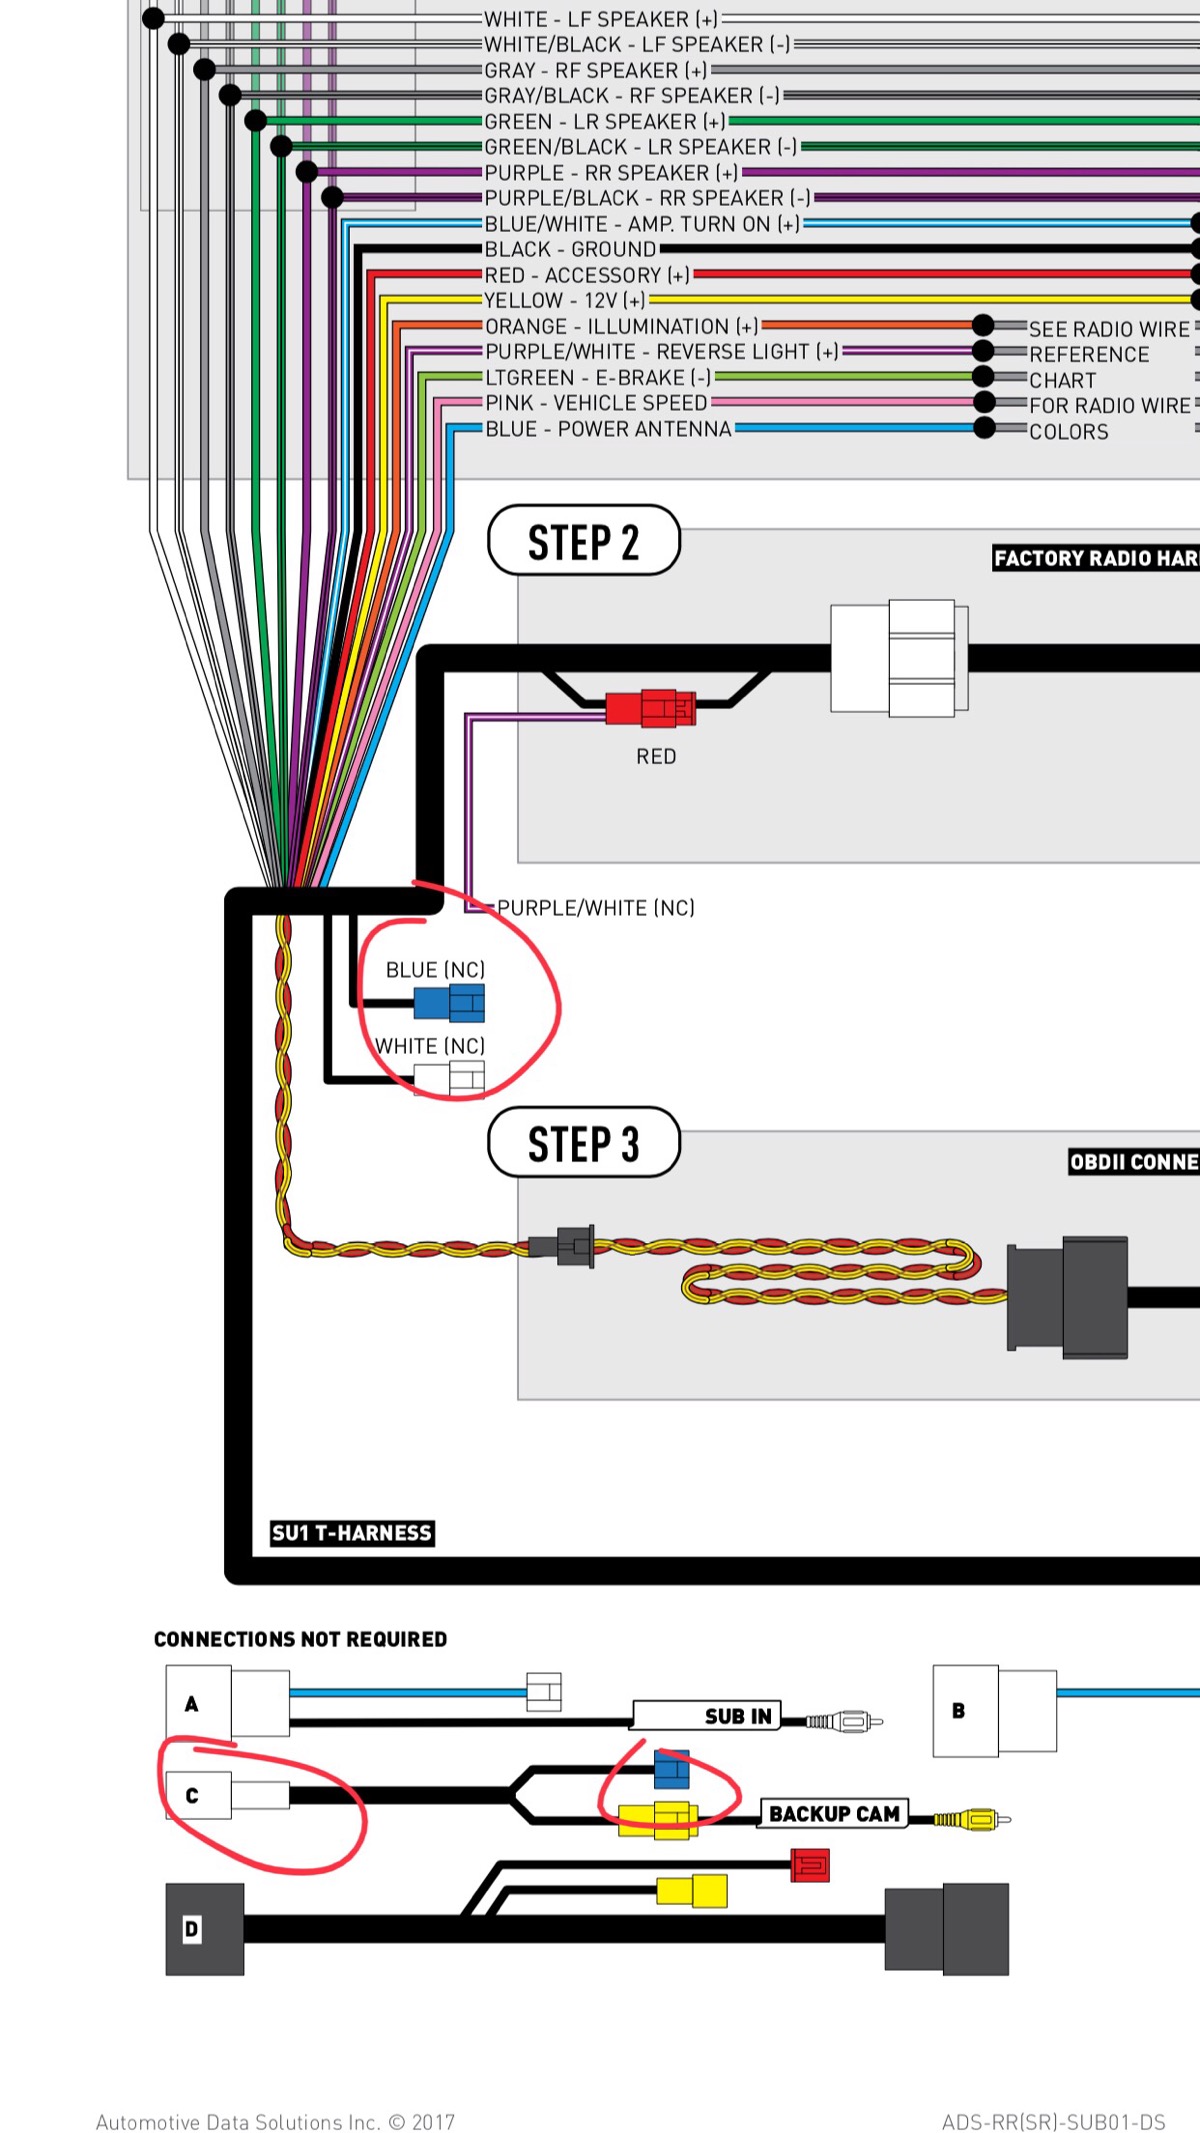 sony idatalink maestro sw wiring diagram